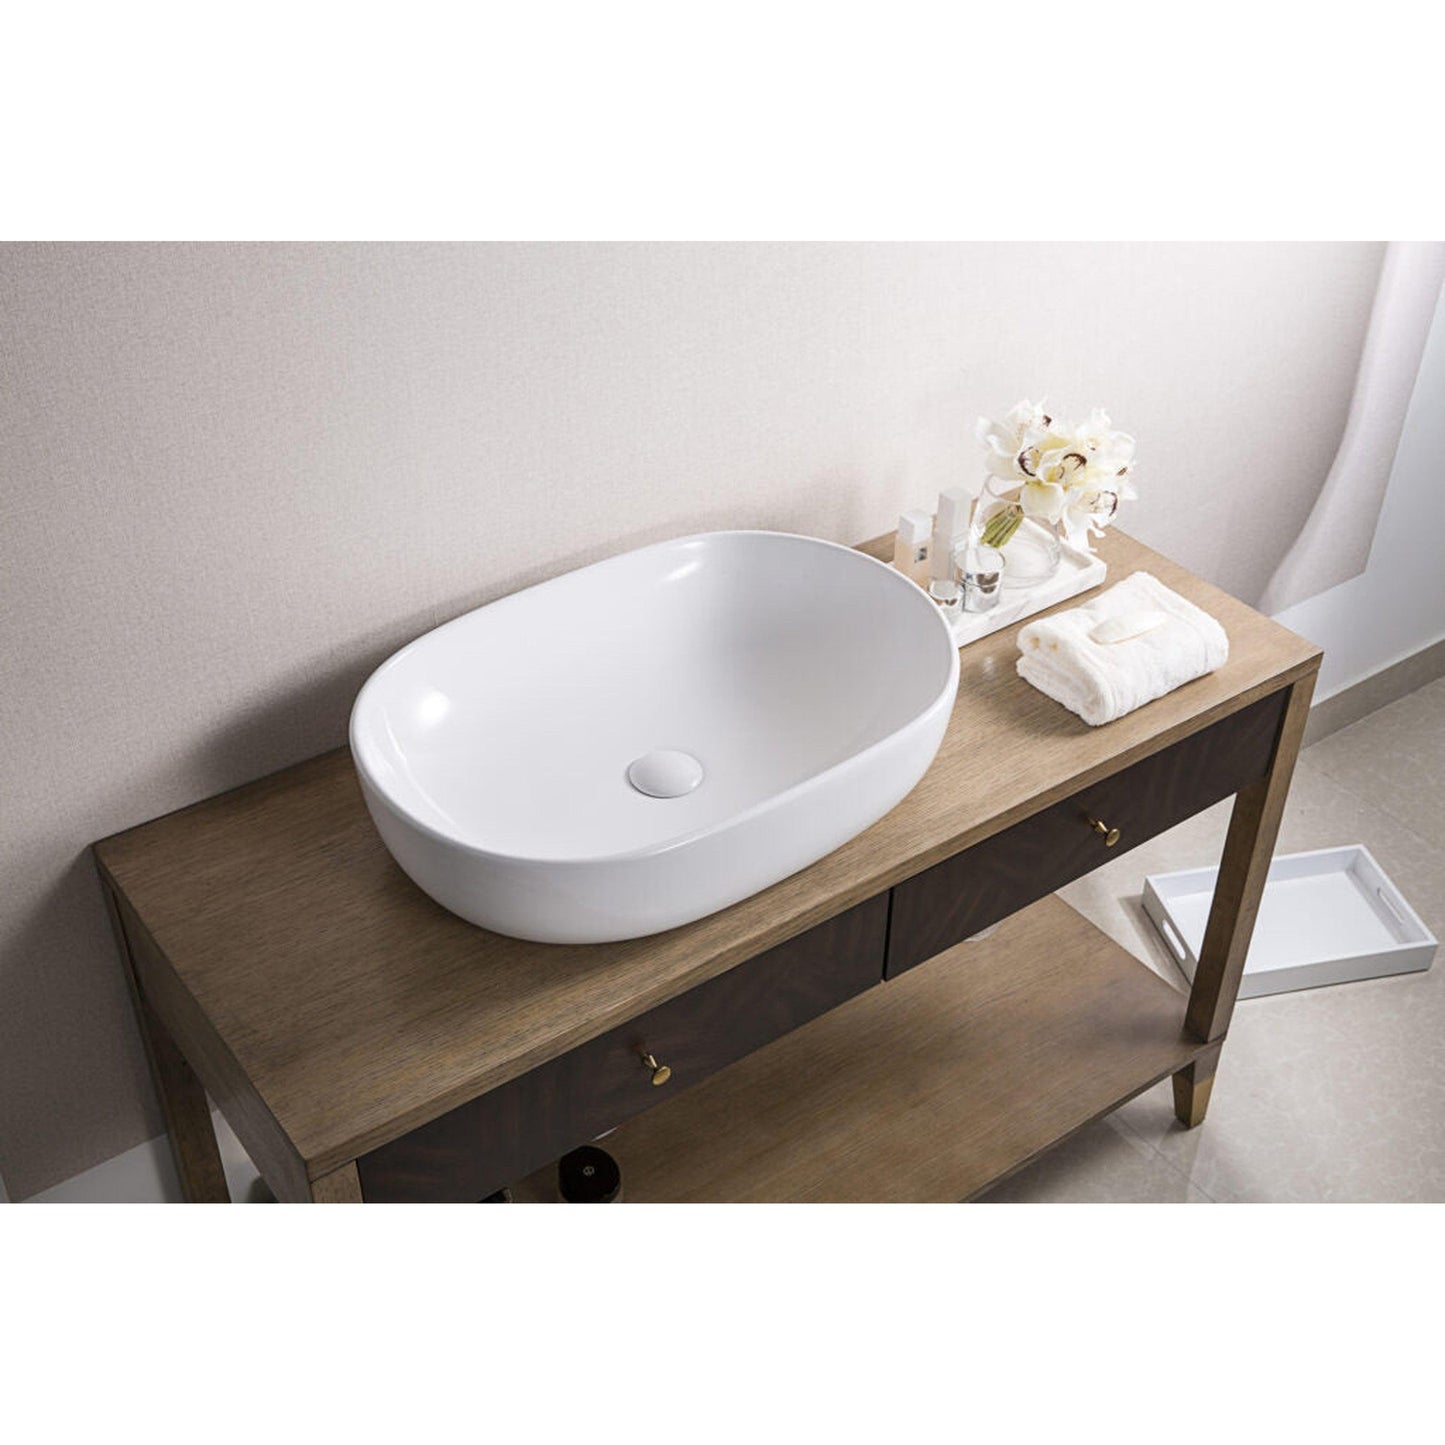 Ruvati Vista 24” x 16” Oval White Above Counter Porcelain Ceramic Bathroom Vessel Sink